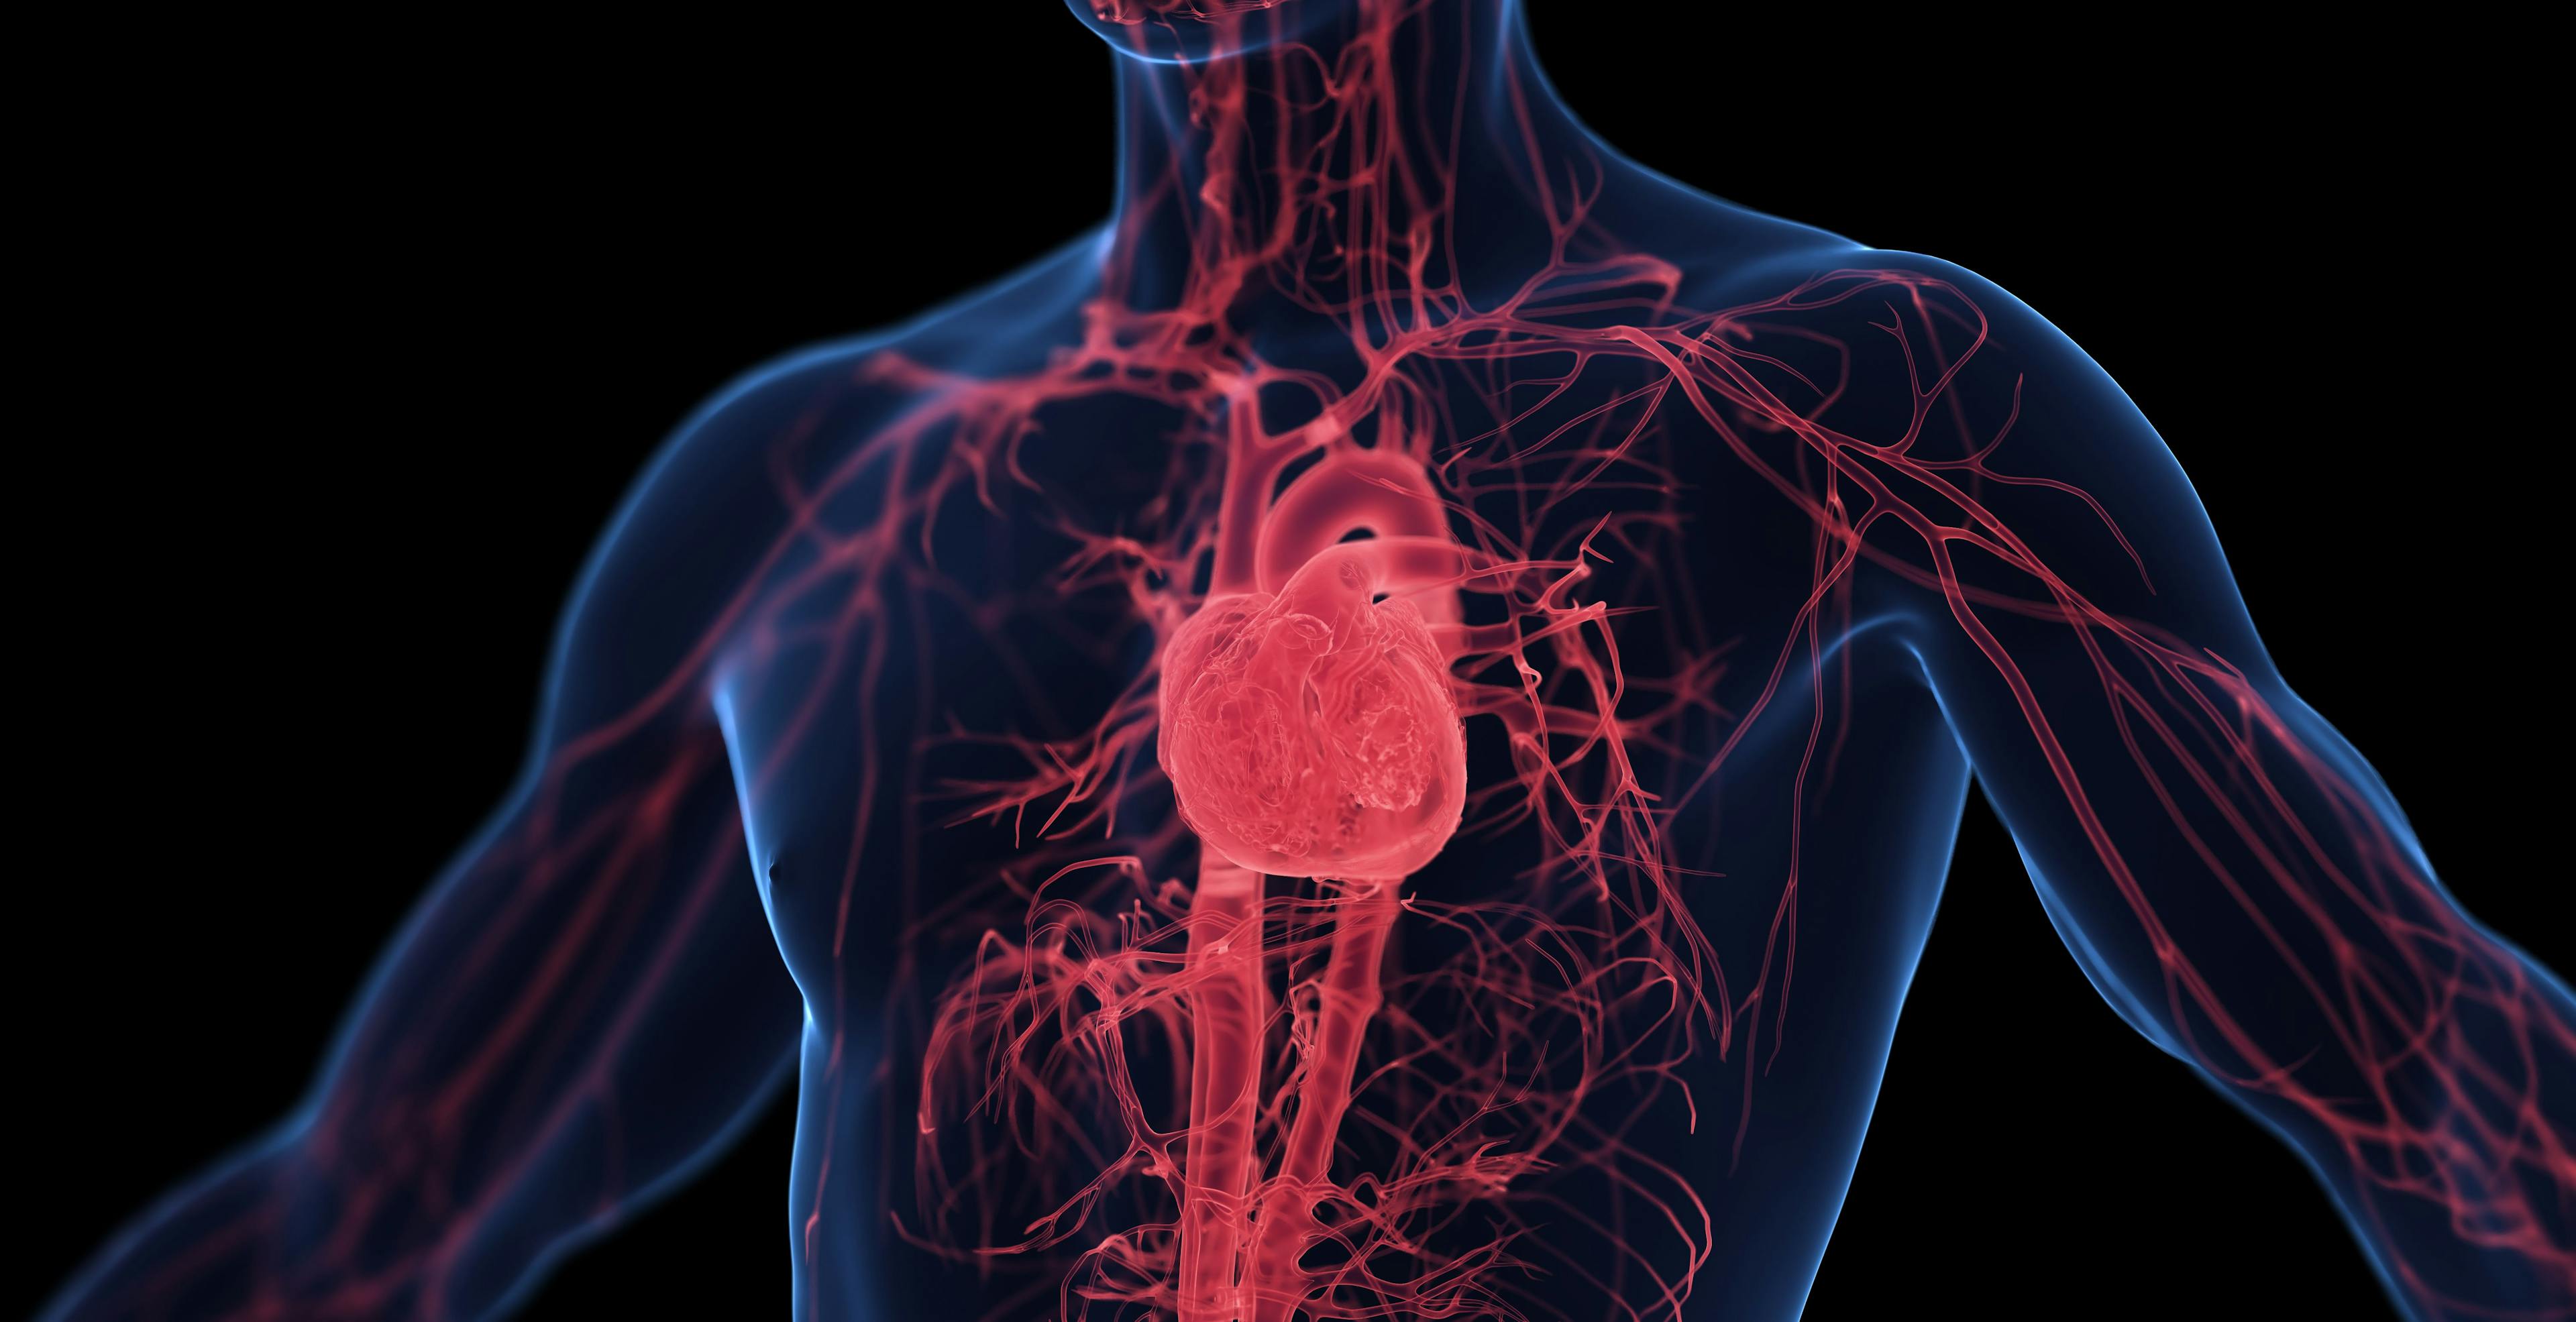 Cardiovascular system -- Image credit: Sebastian Kaulitzki | stock.adobe.com